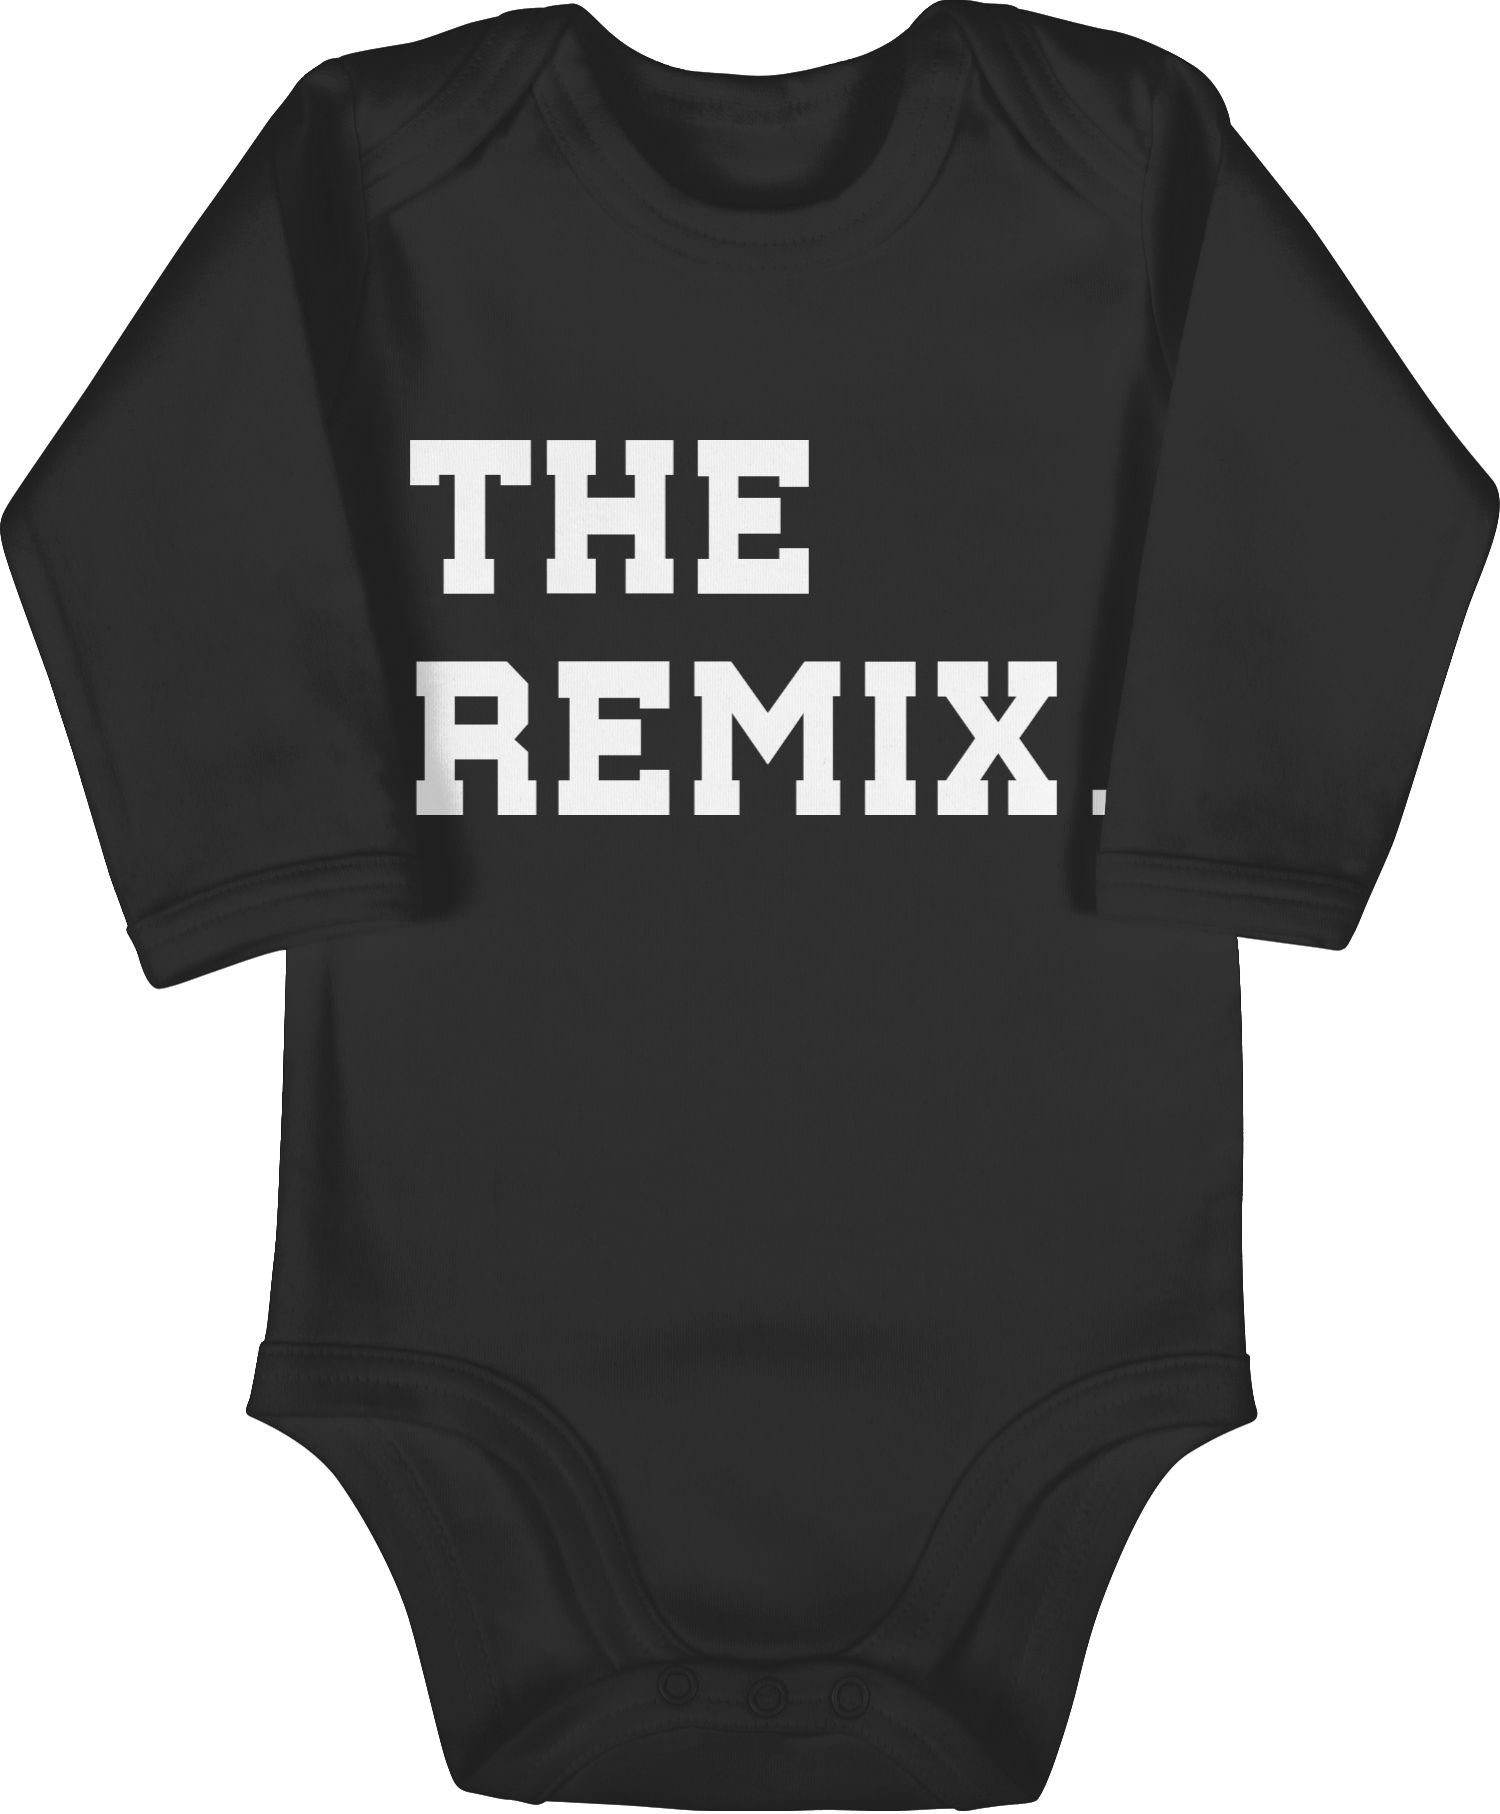 Shirtracer Shirtbody The Original The Remix Kind Partner-Look Familie Baby 1 Schwarz